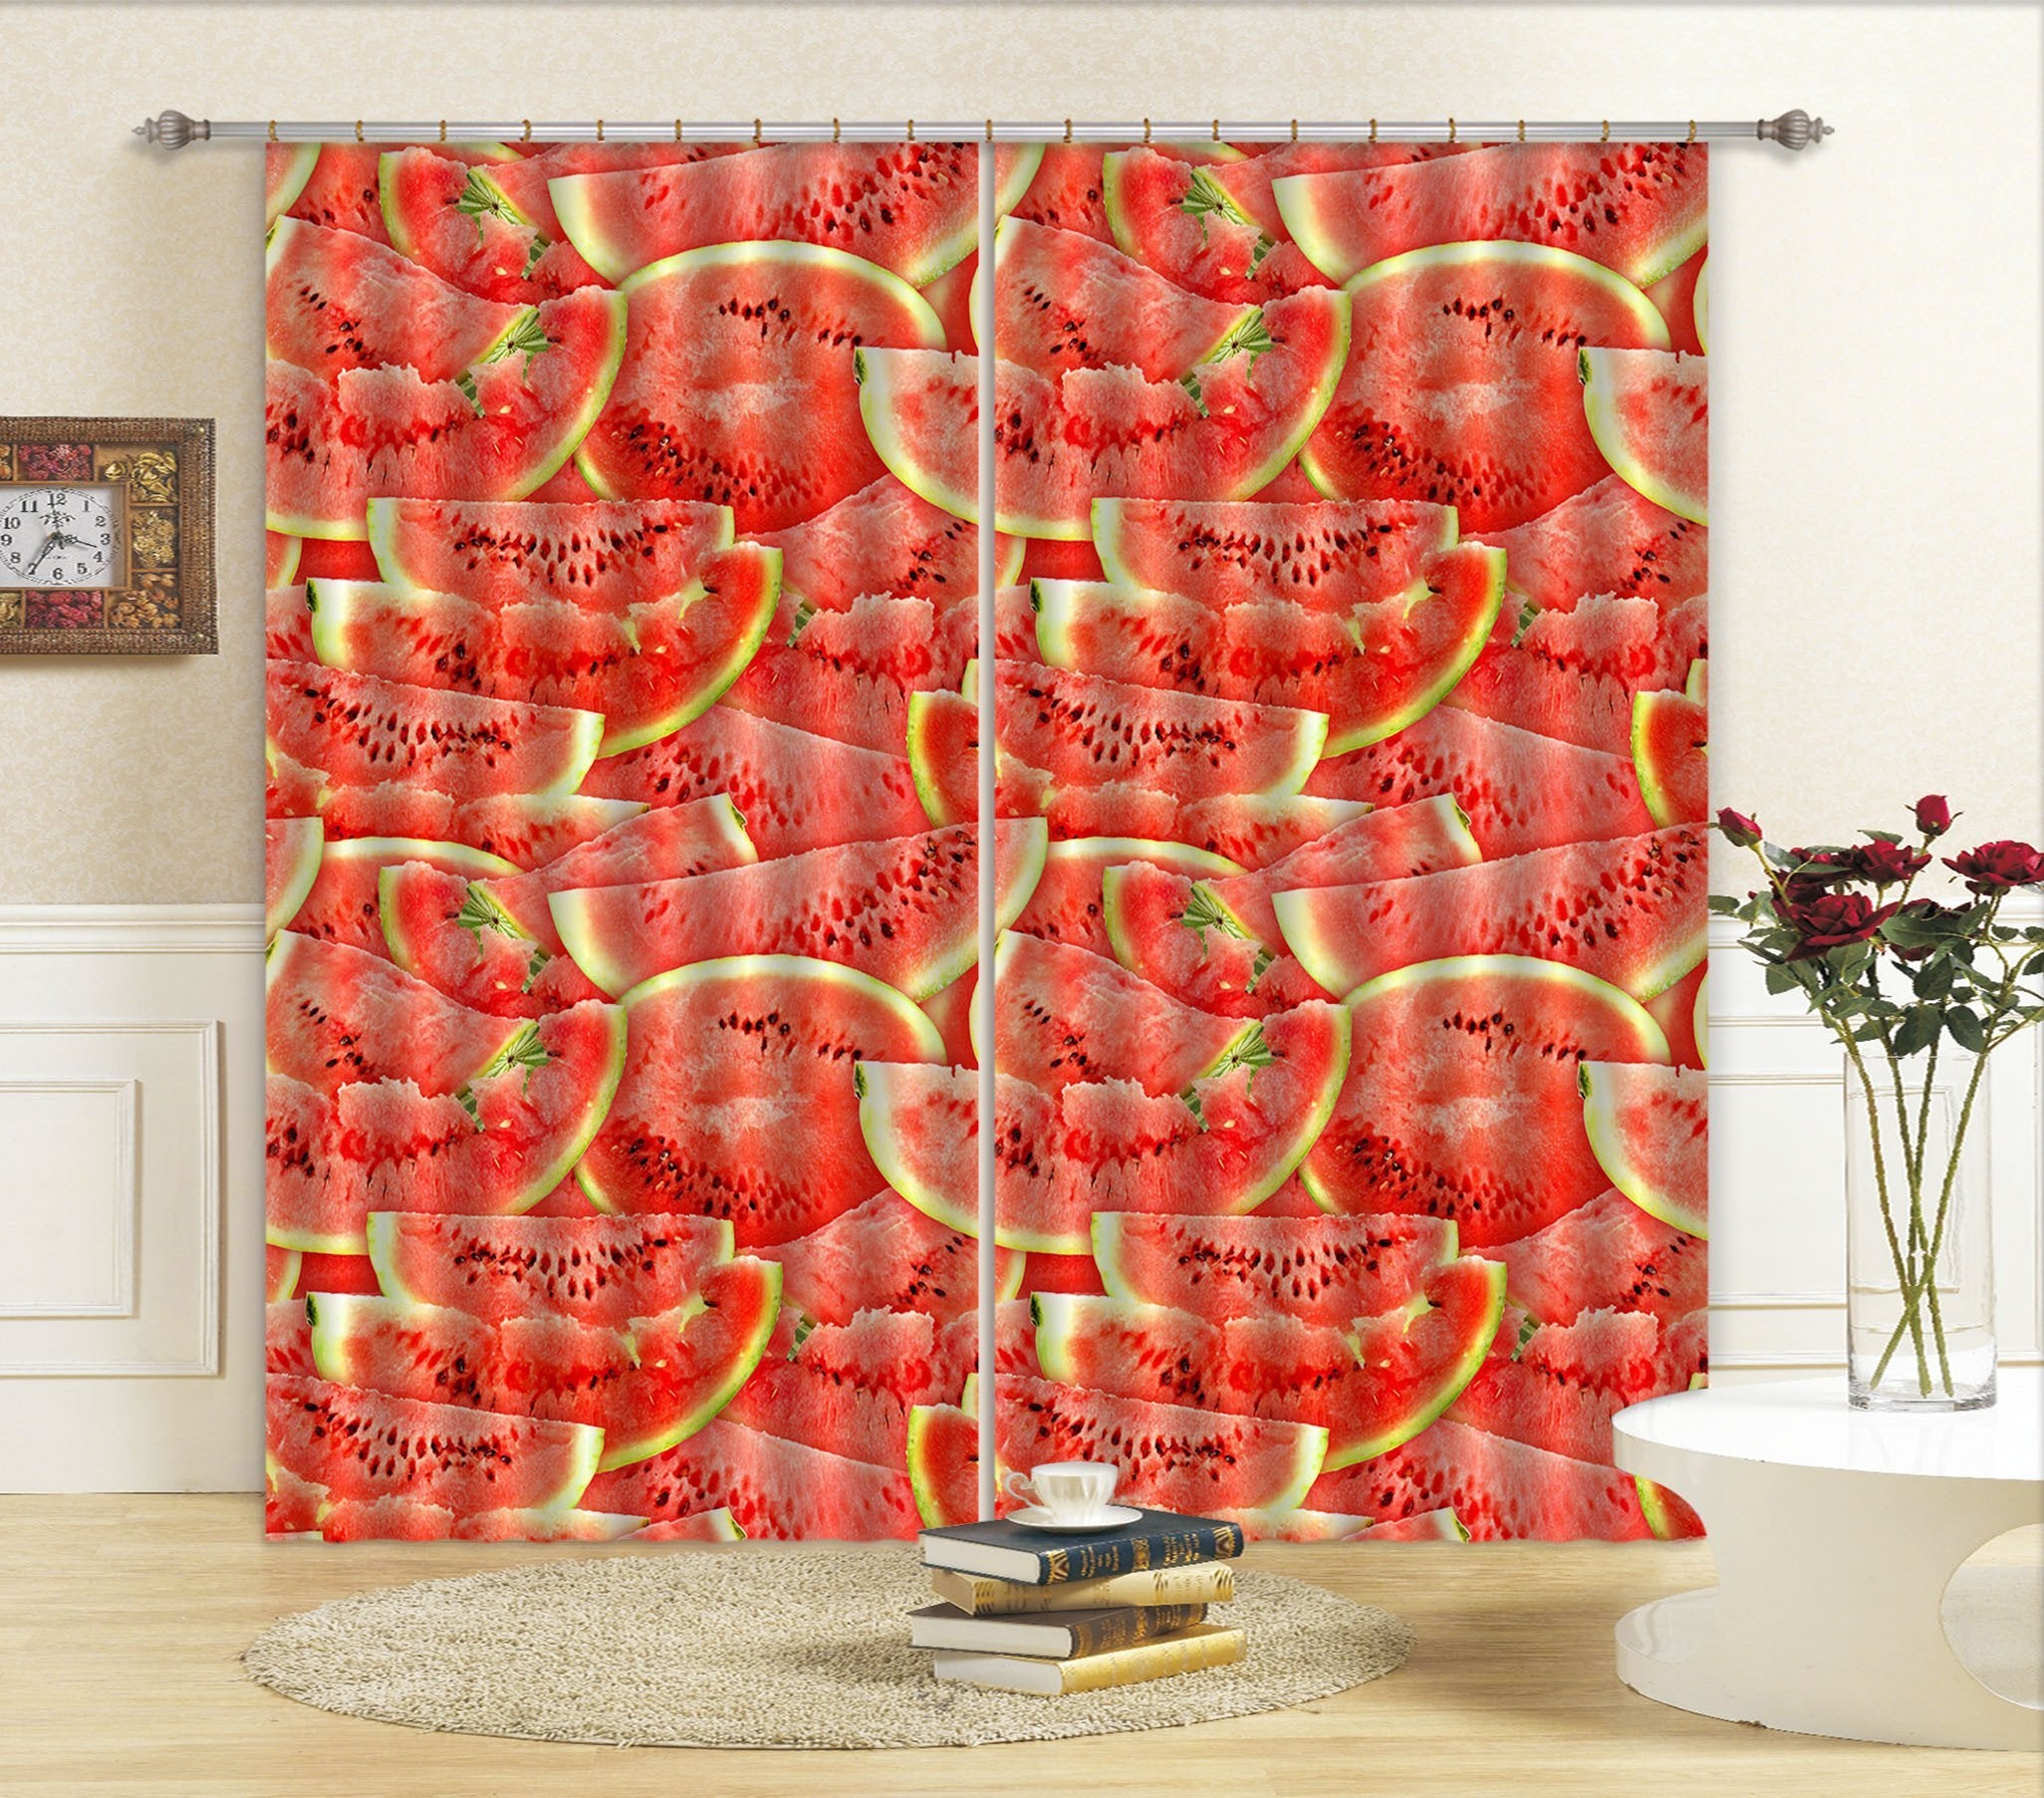 3D Watermelon Slices 150 Curtains Drapes Wallpaper AJ Wallpaper 